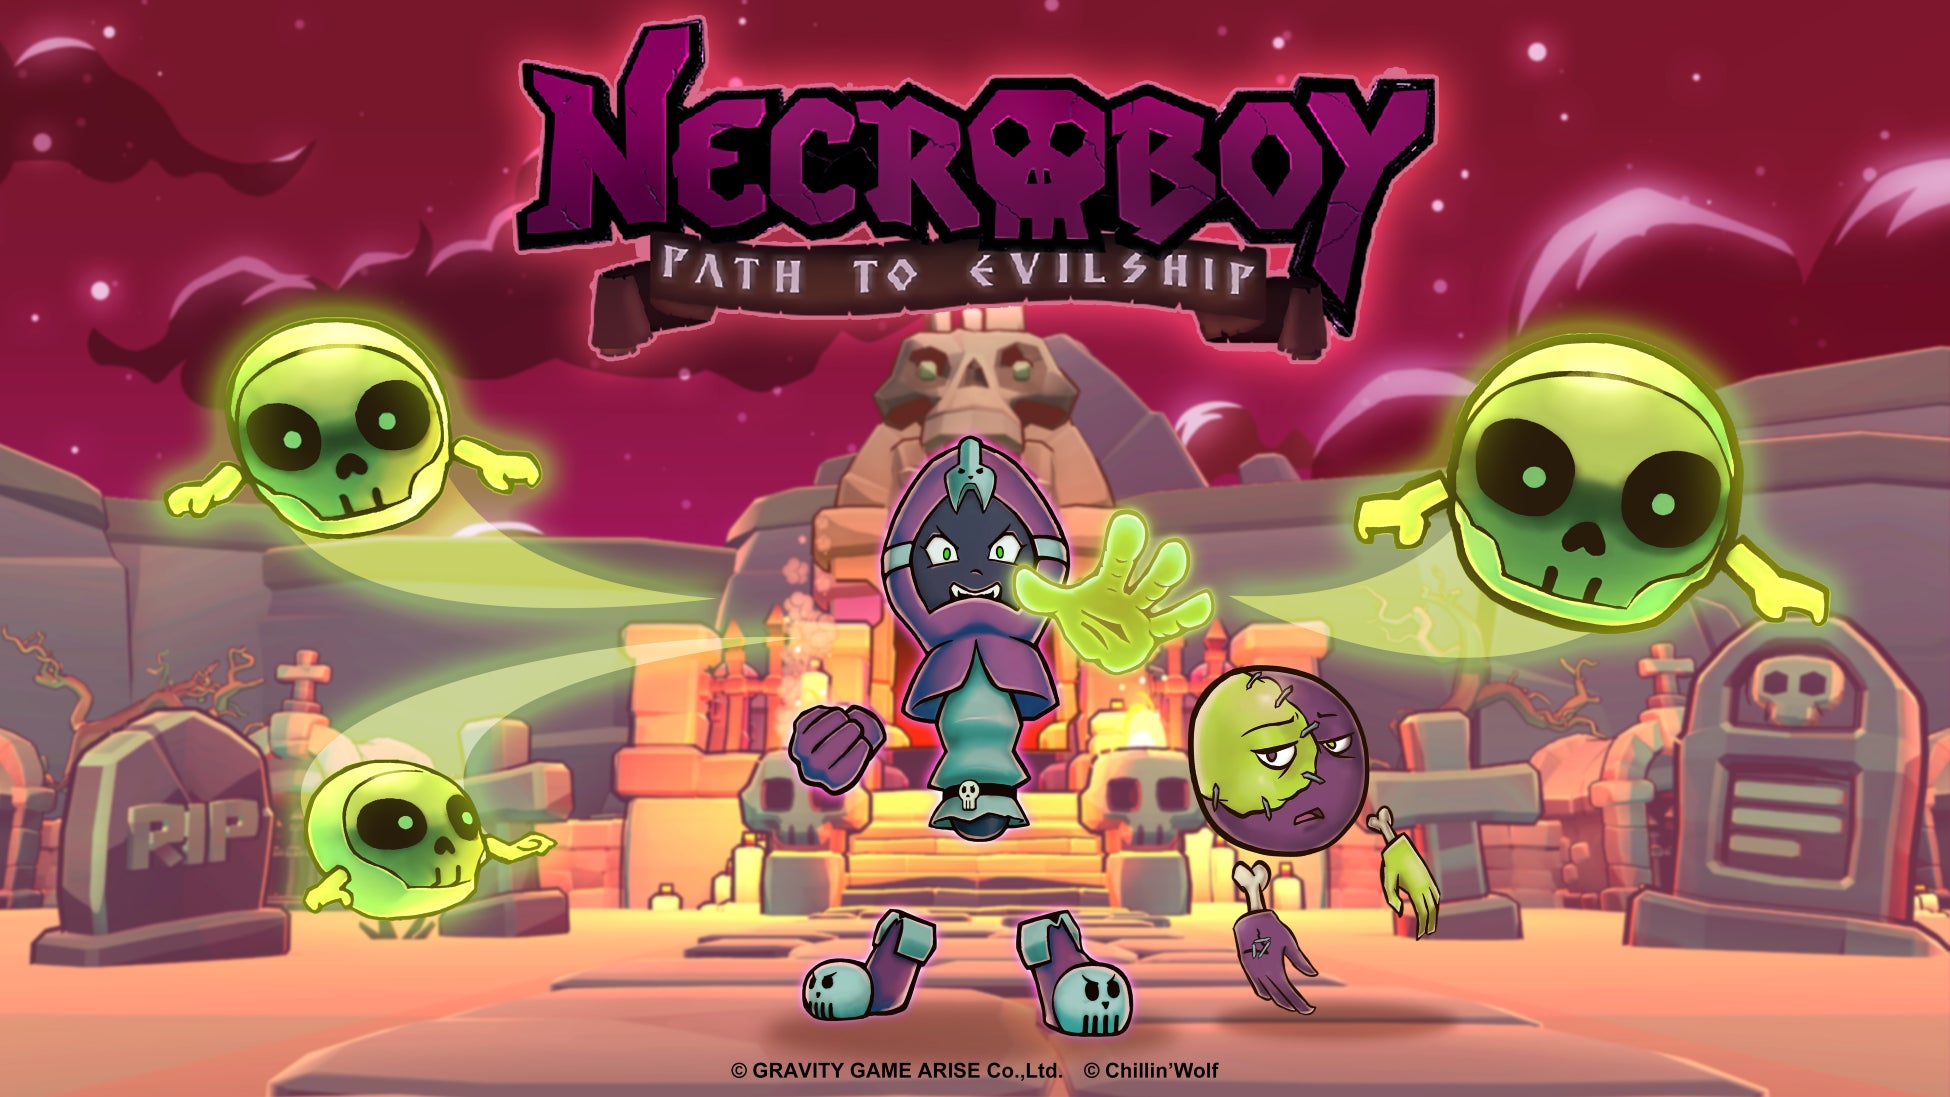 【NecroBoy : Path to Evilship】死せる魂を闇の力で操るパズルアクションゲーム、Nintendo Switch版がついに登場！